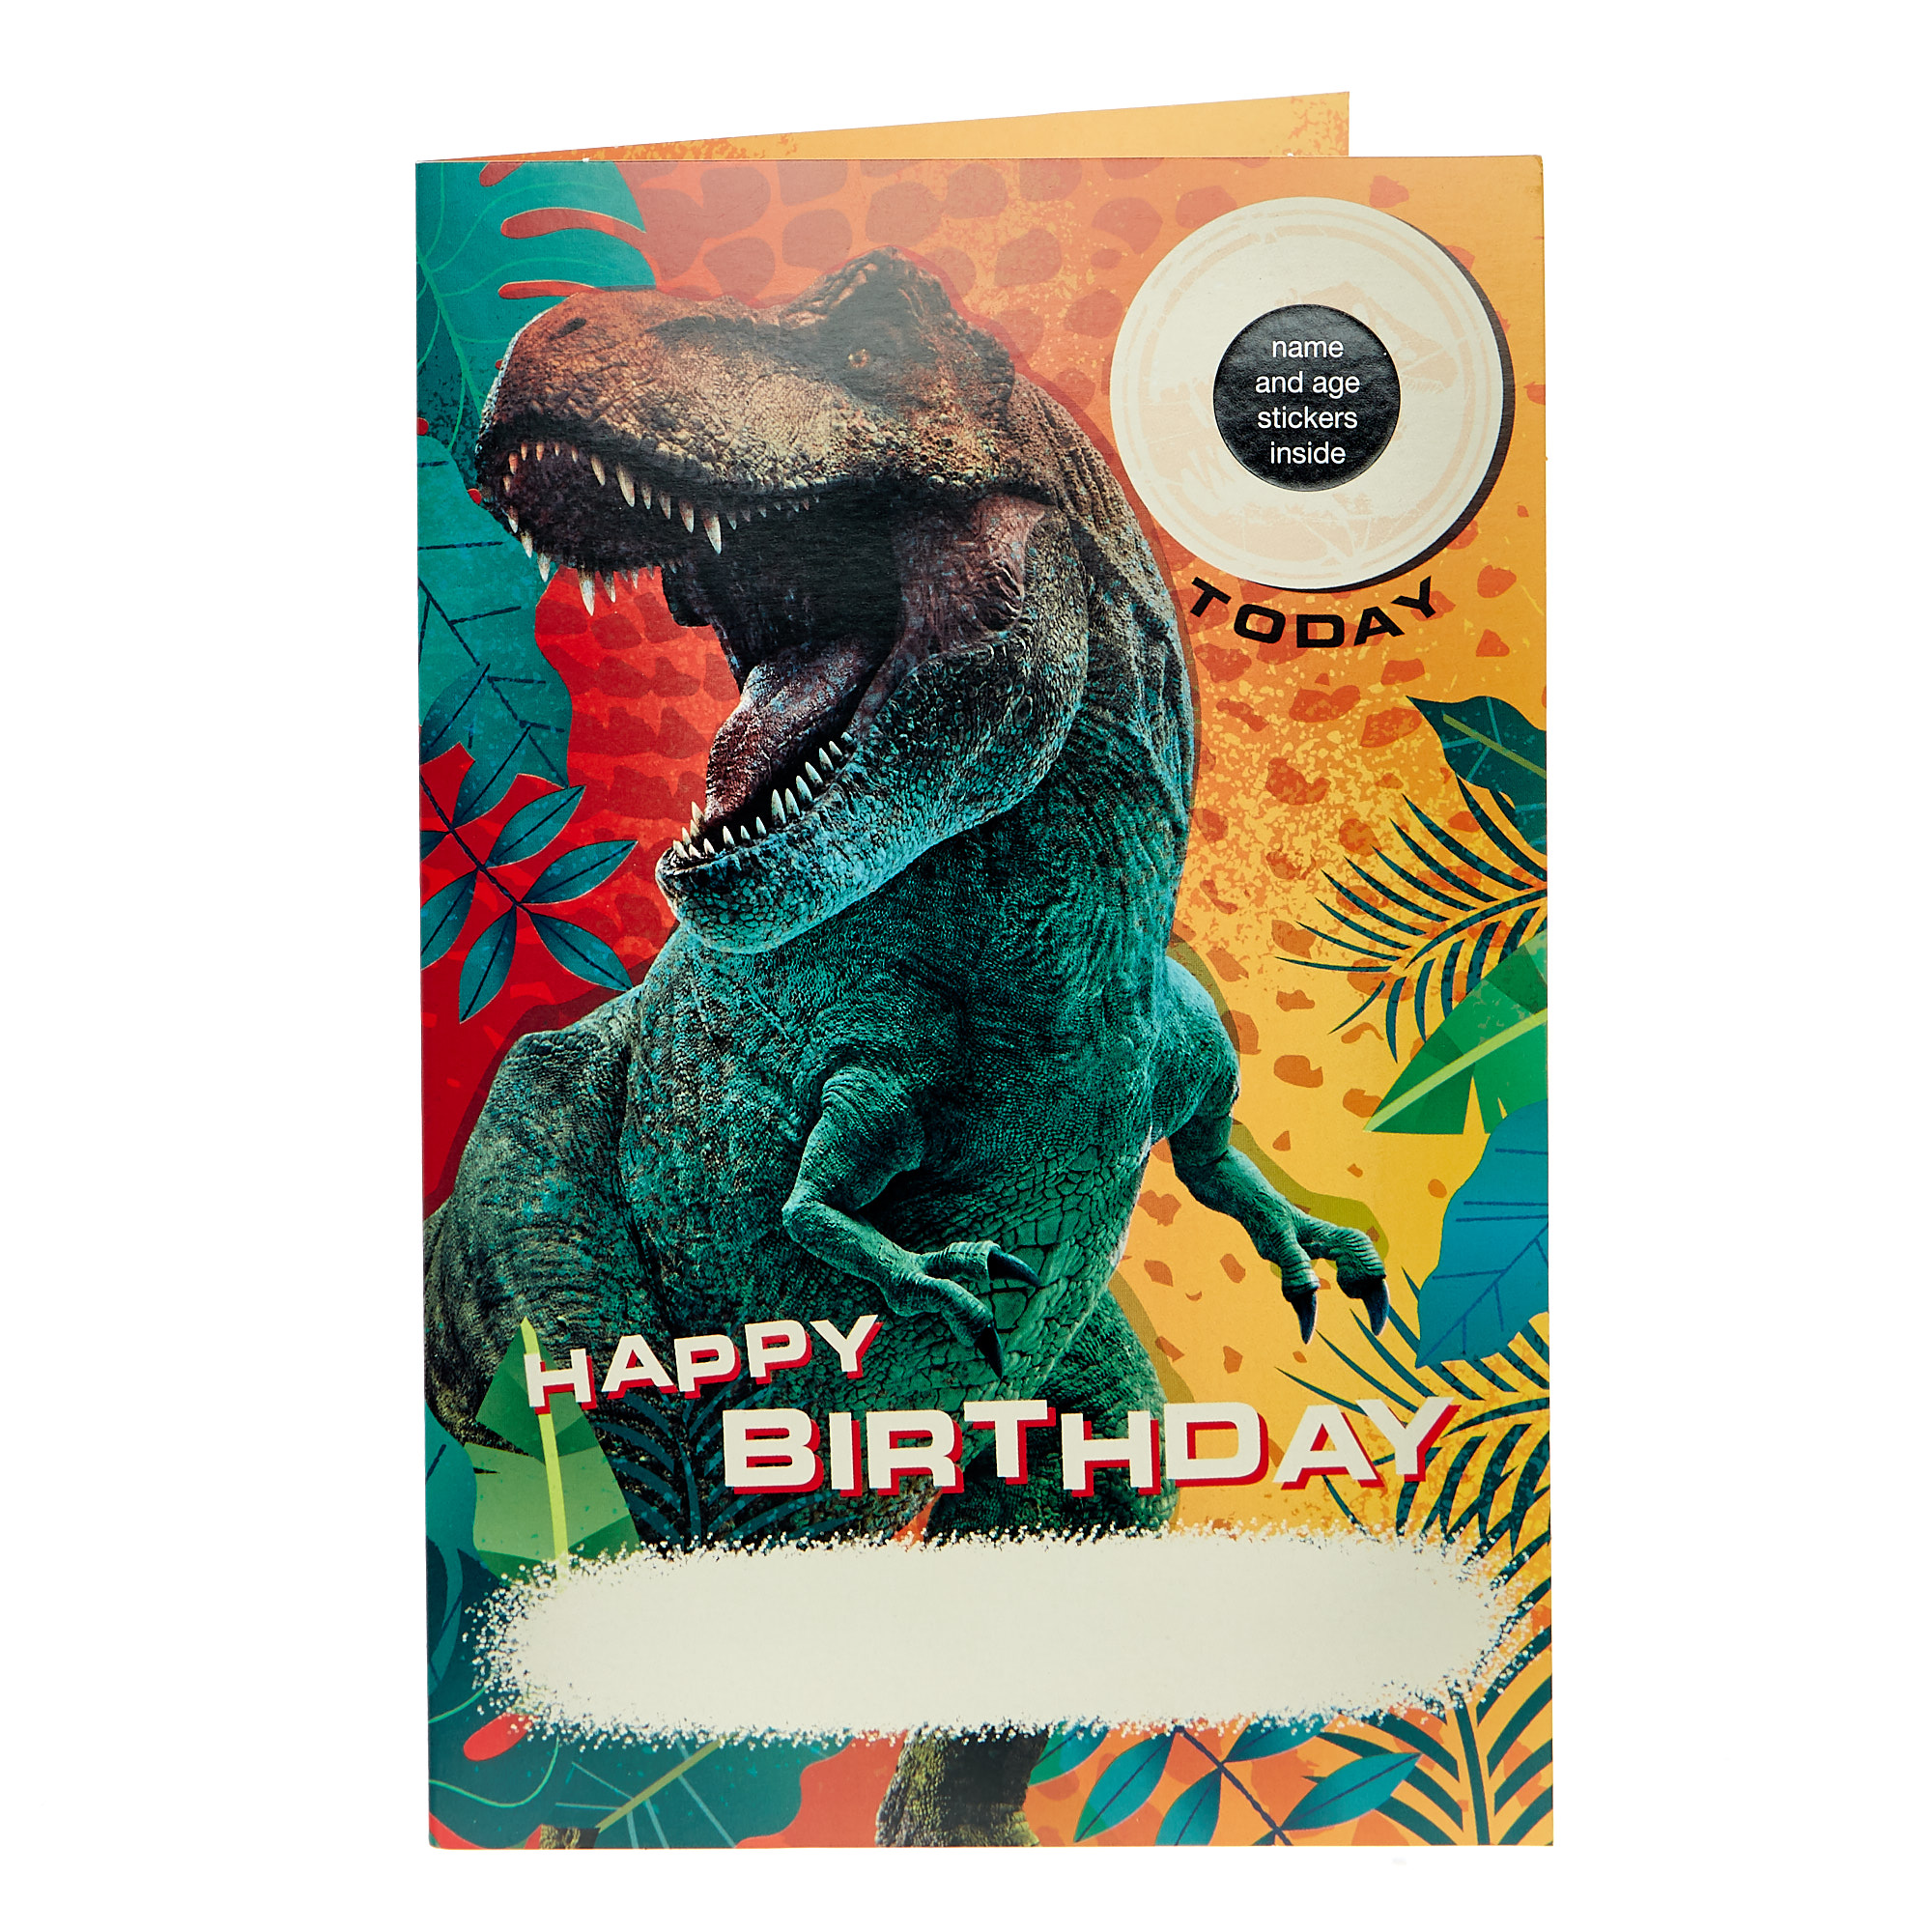 Jurassic World Birthday Card - Name & Age Stickers